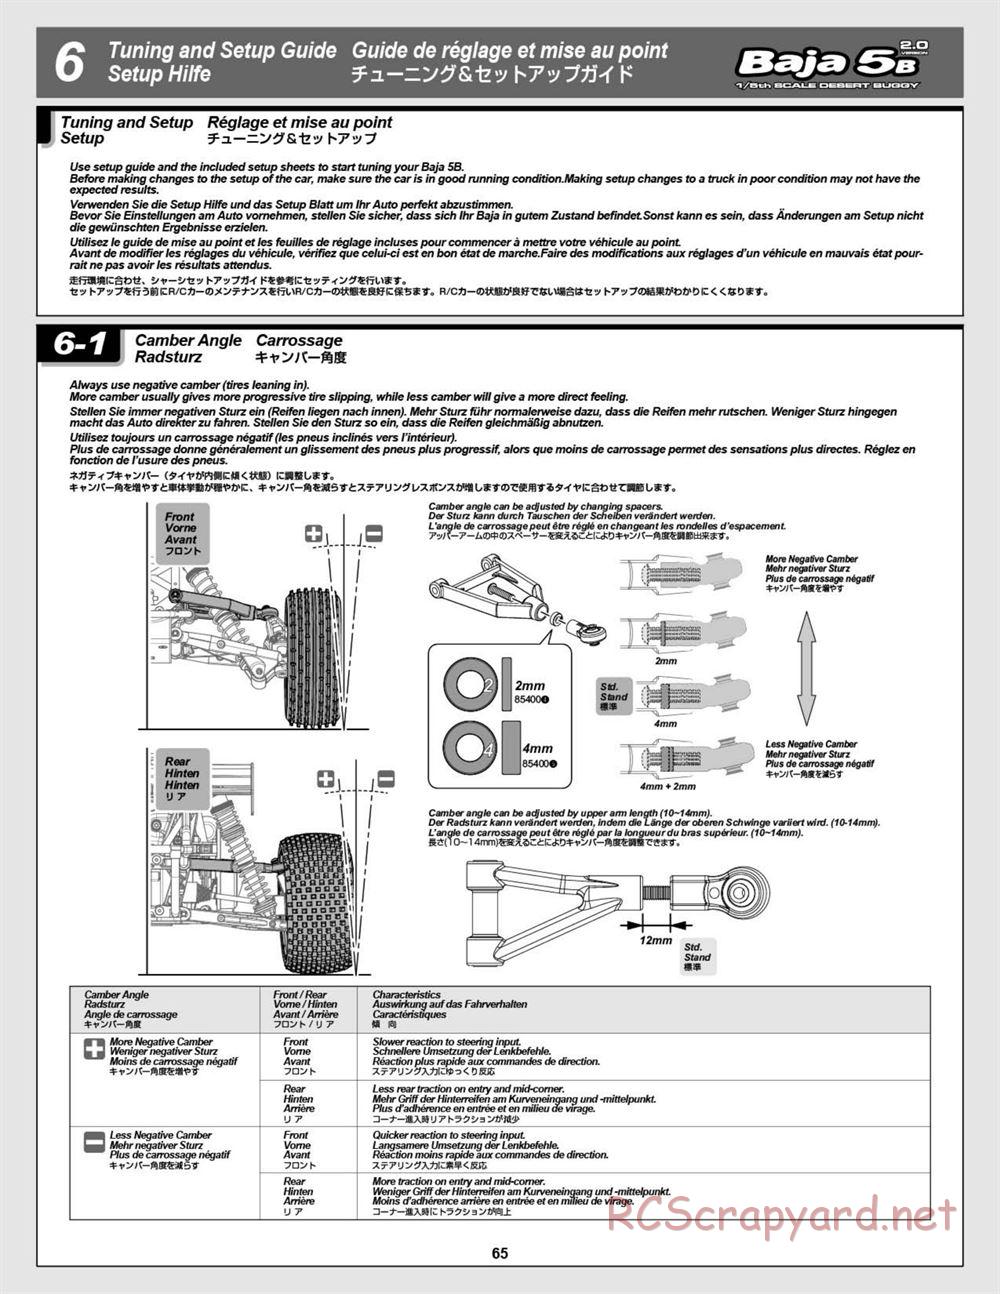 HPI - Baja 5B 2.0 RTR - Manual - Page 65